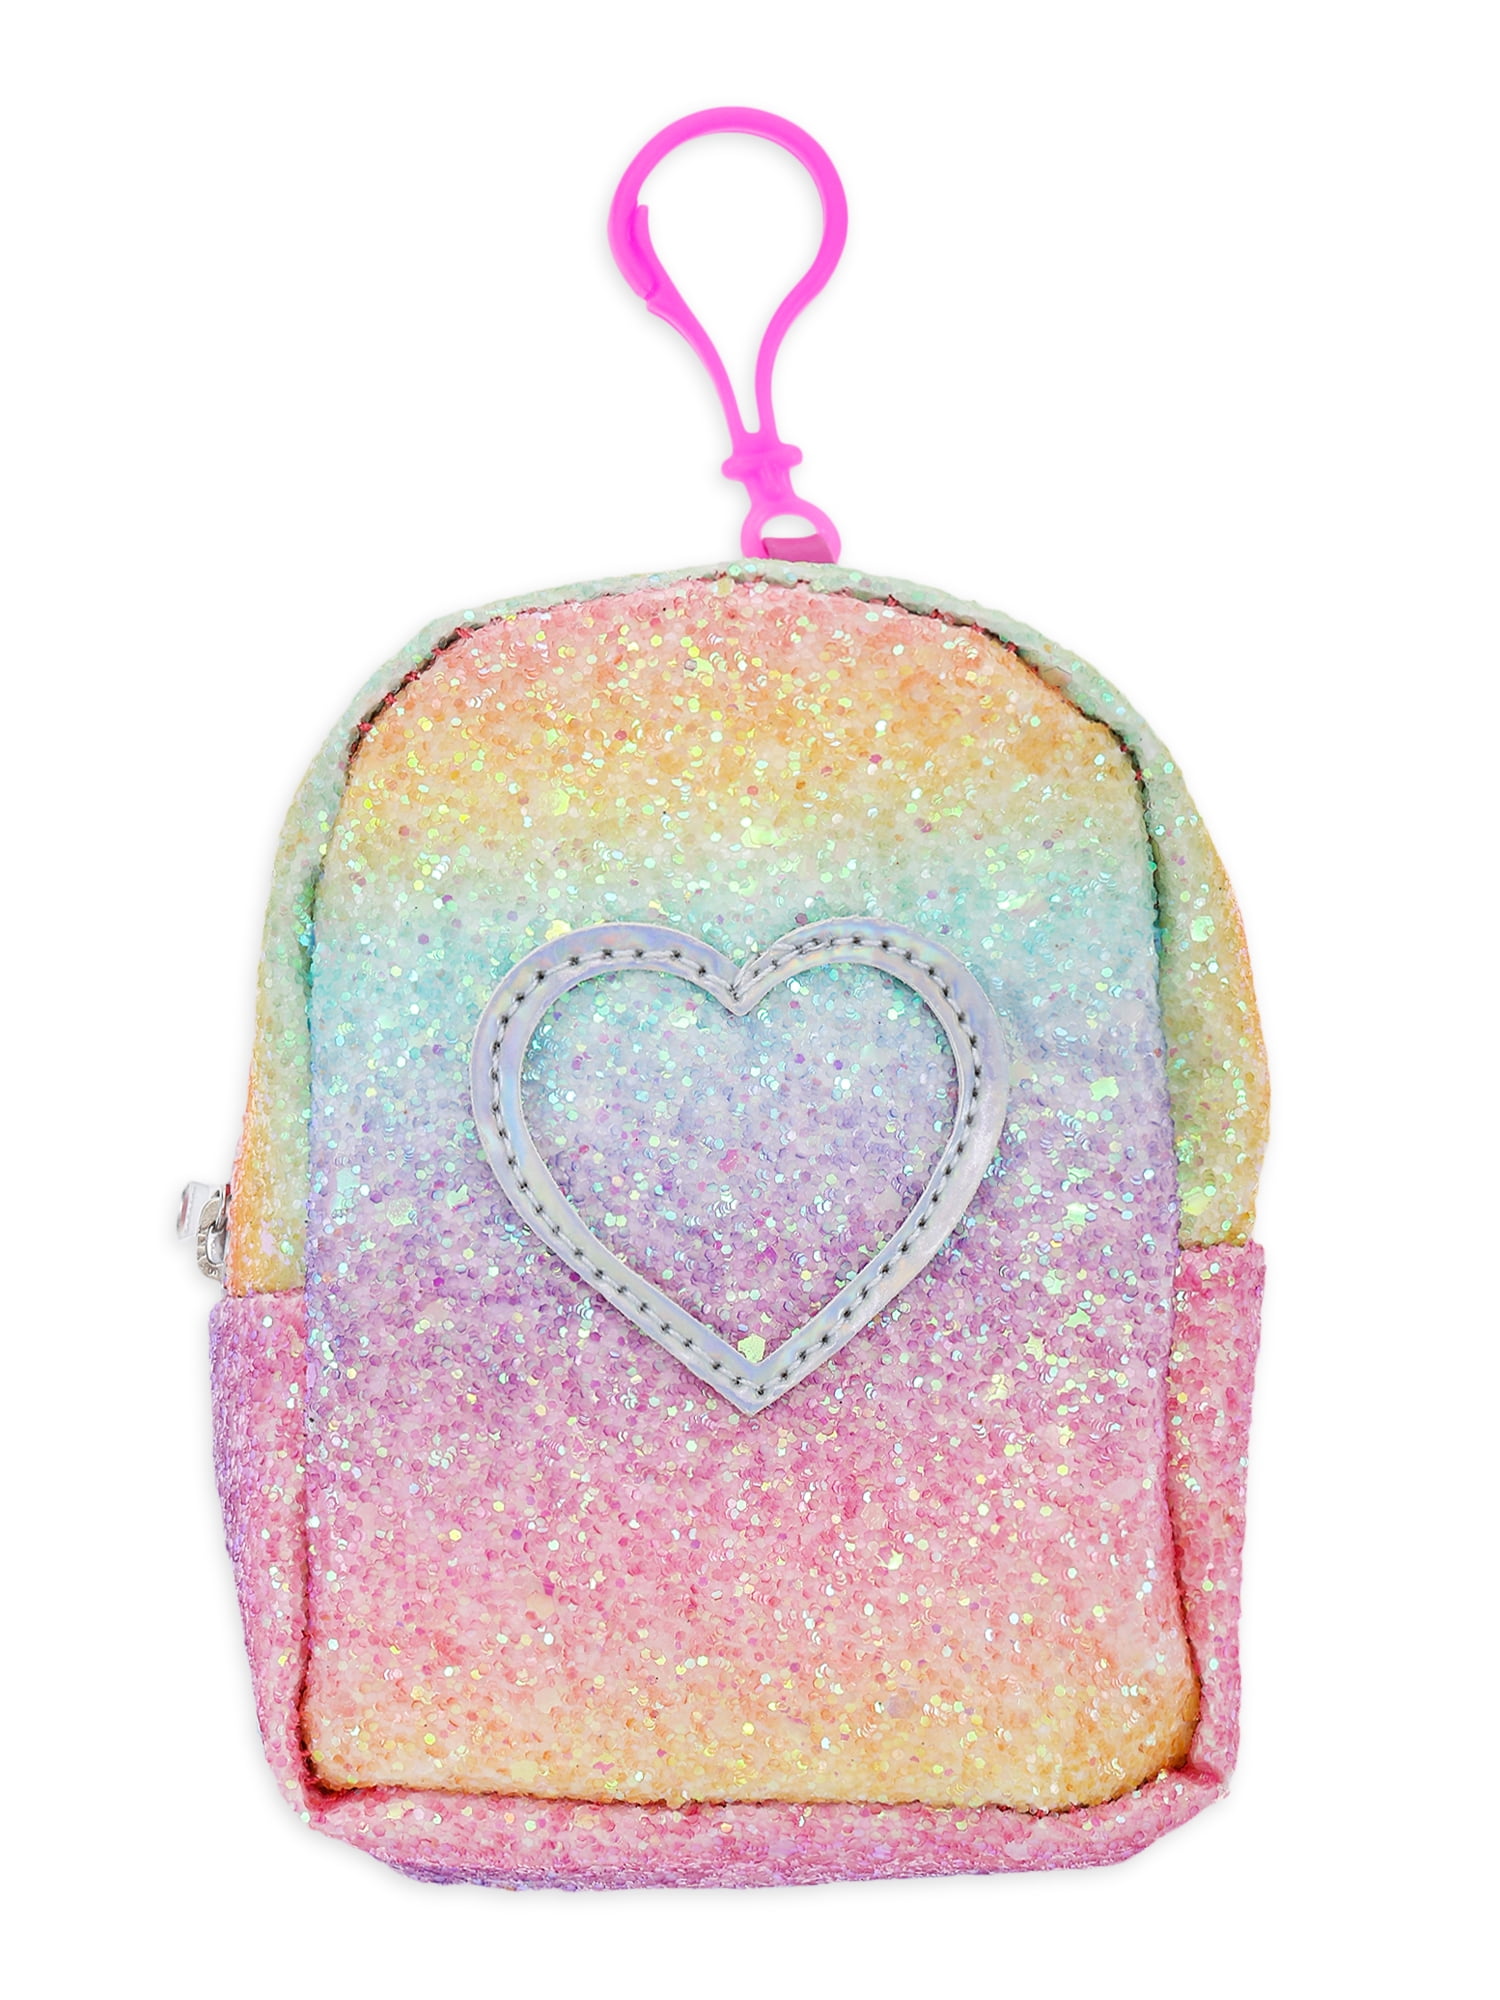 Claire's rainbow coin purse backpack Keychain clip nwt | eBay